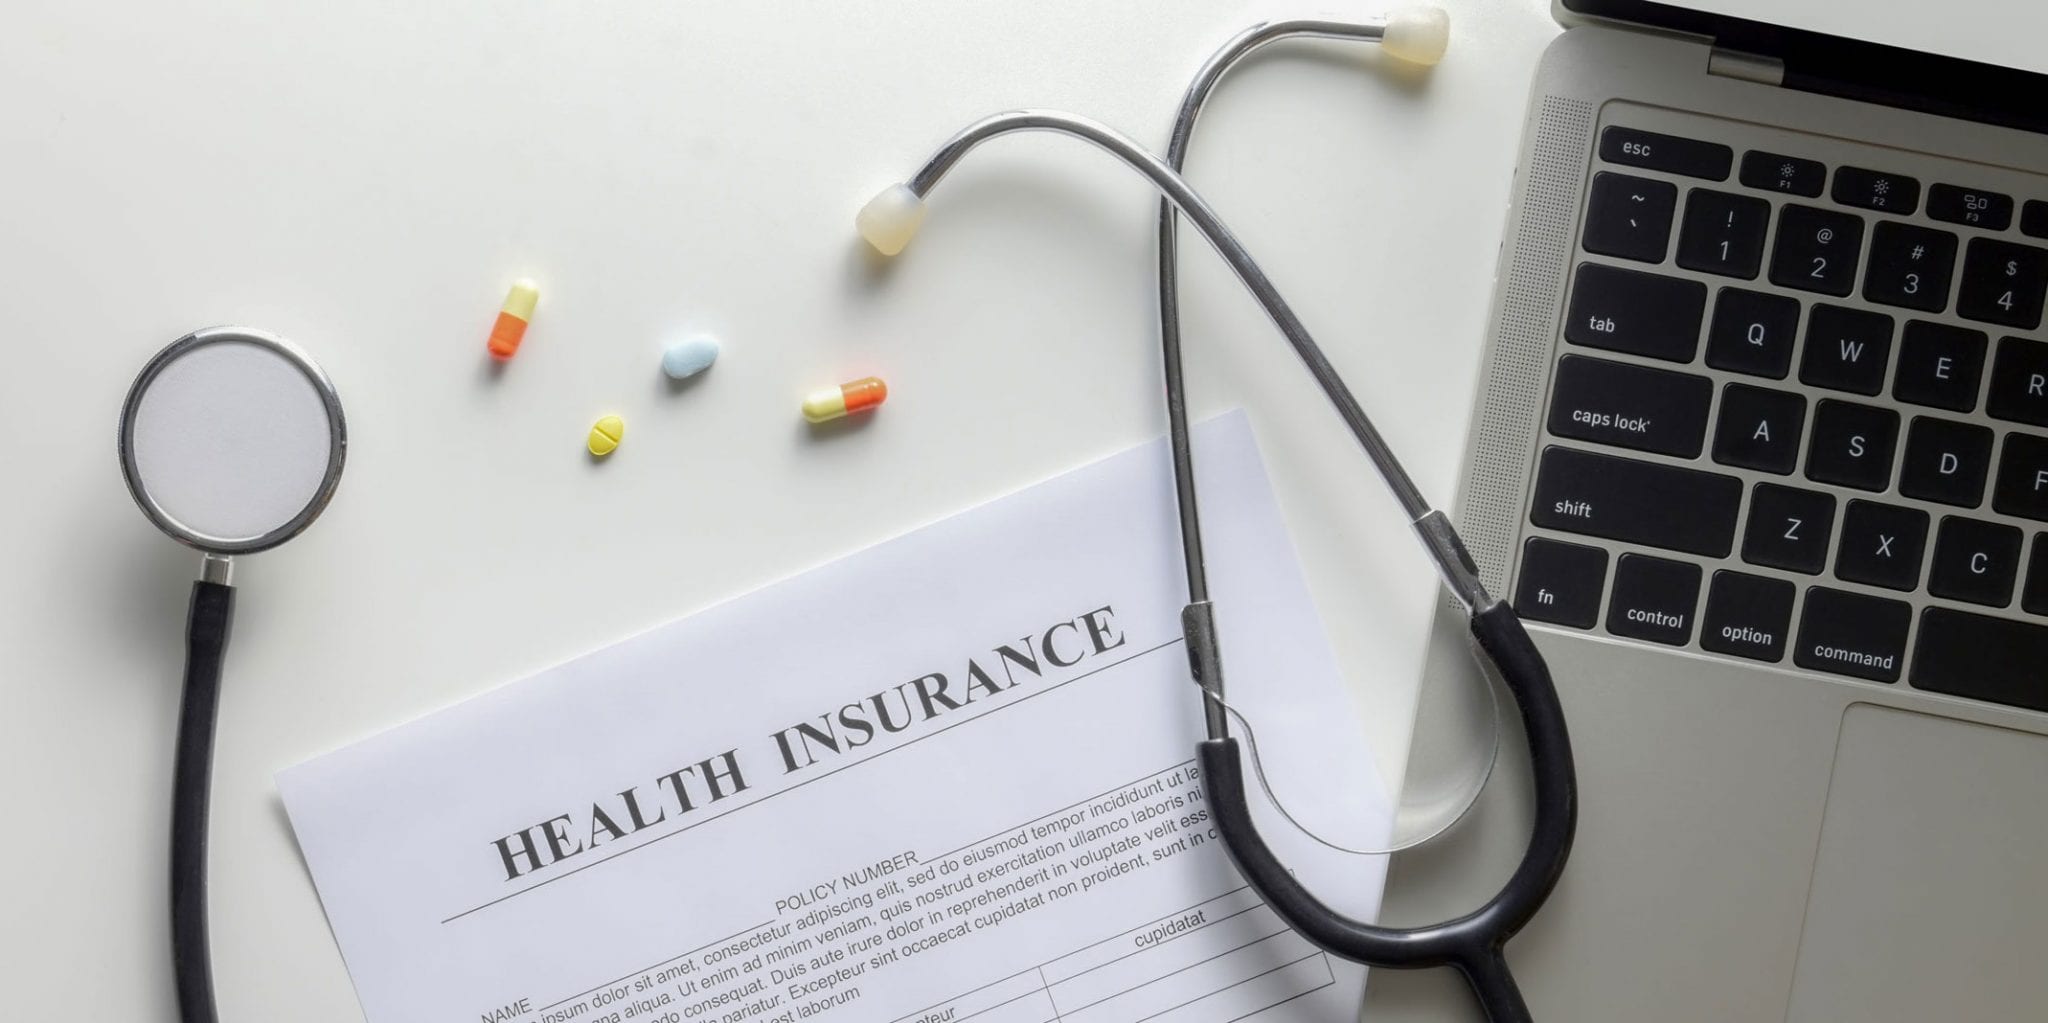 Do you need health insurance